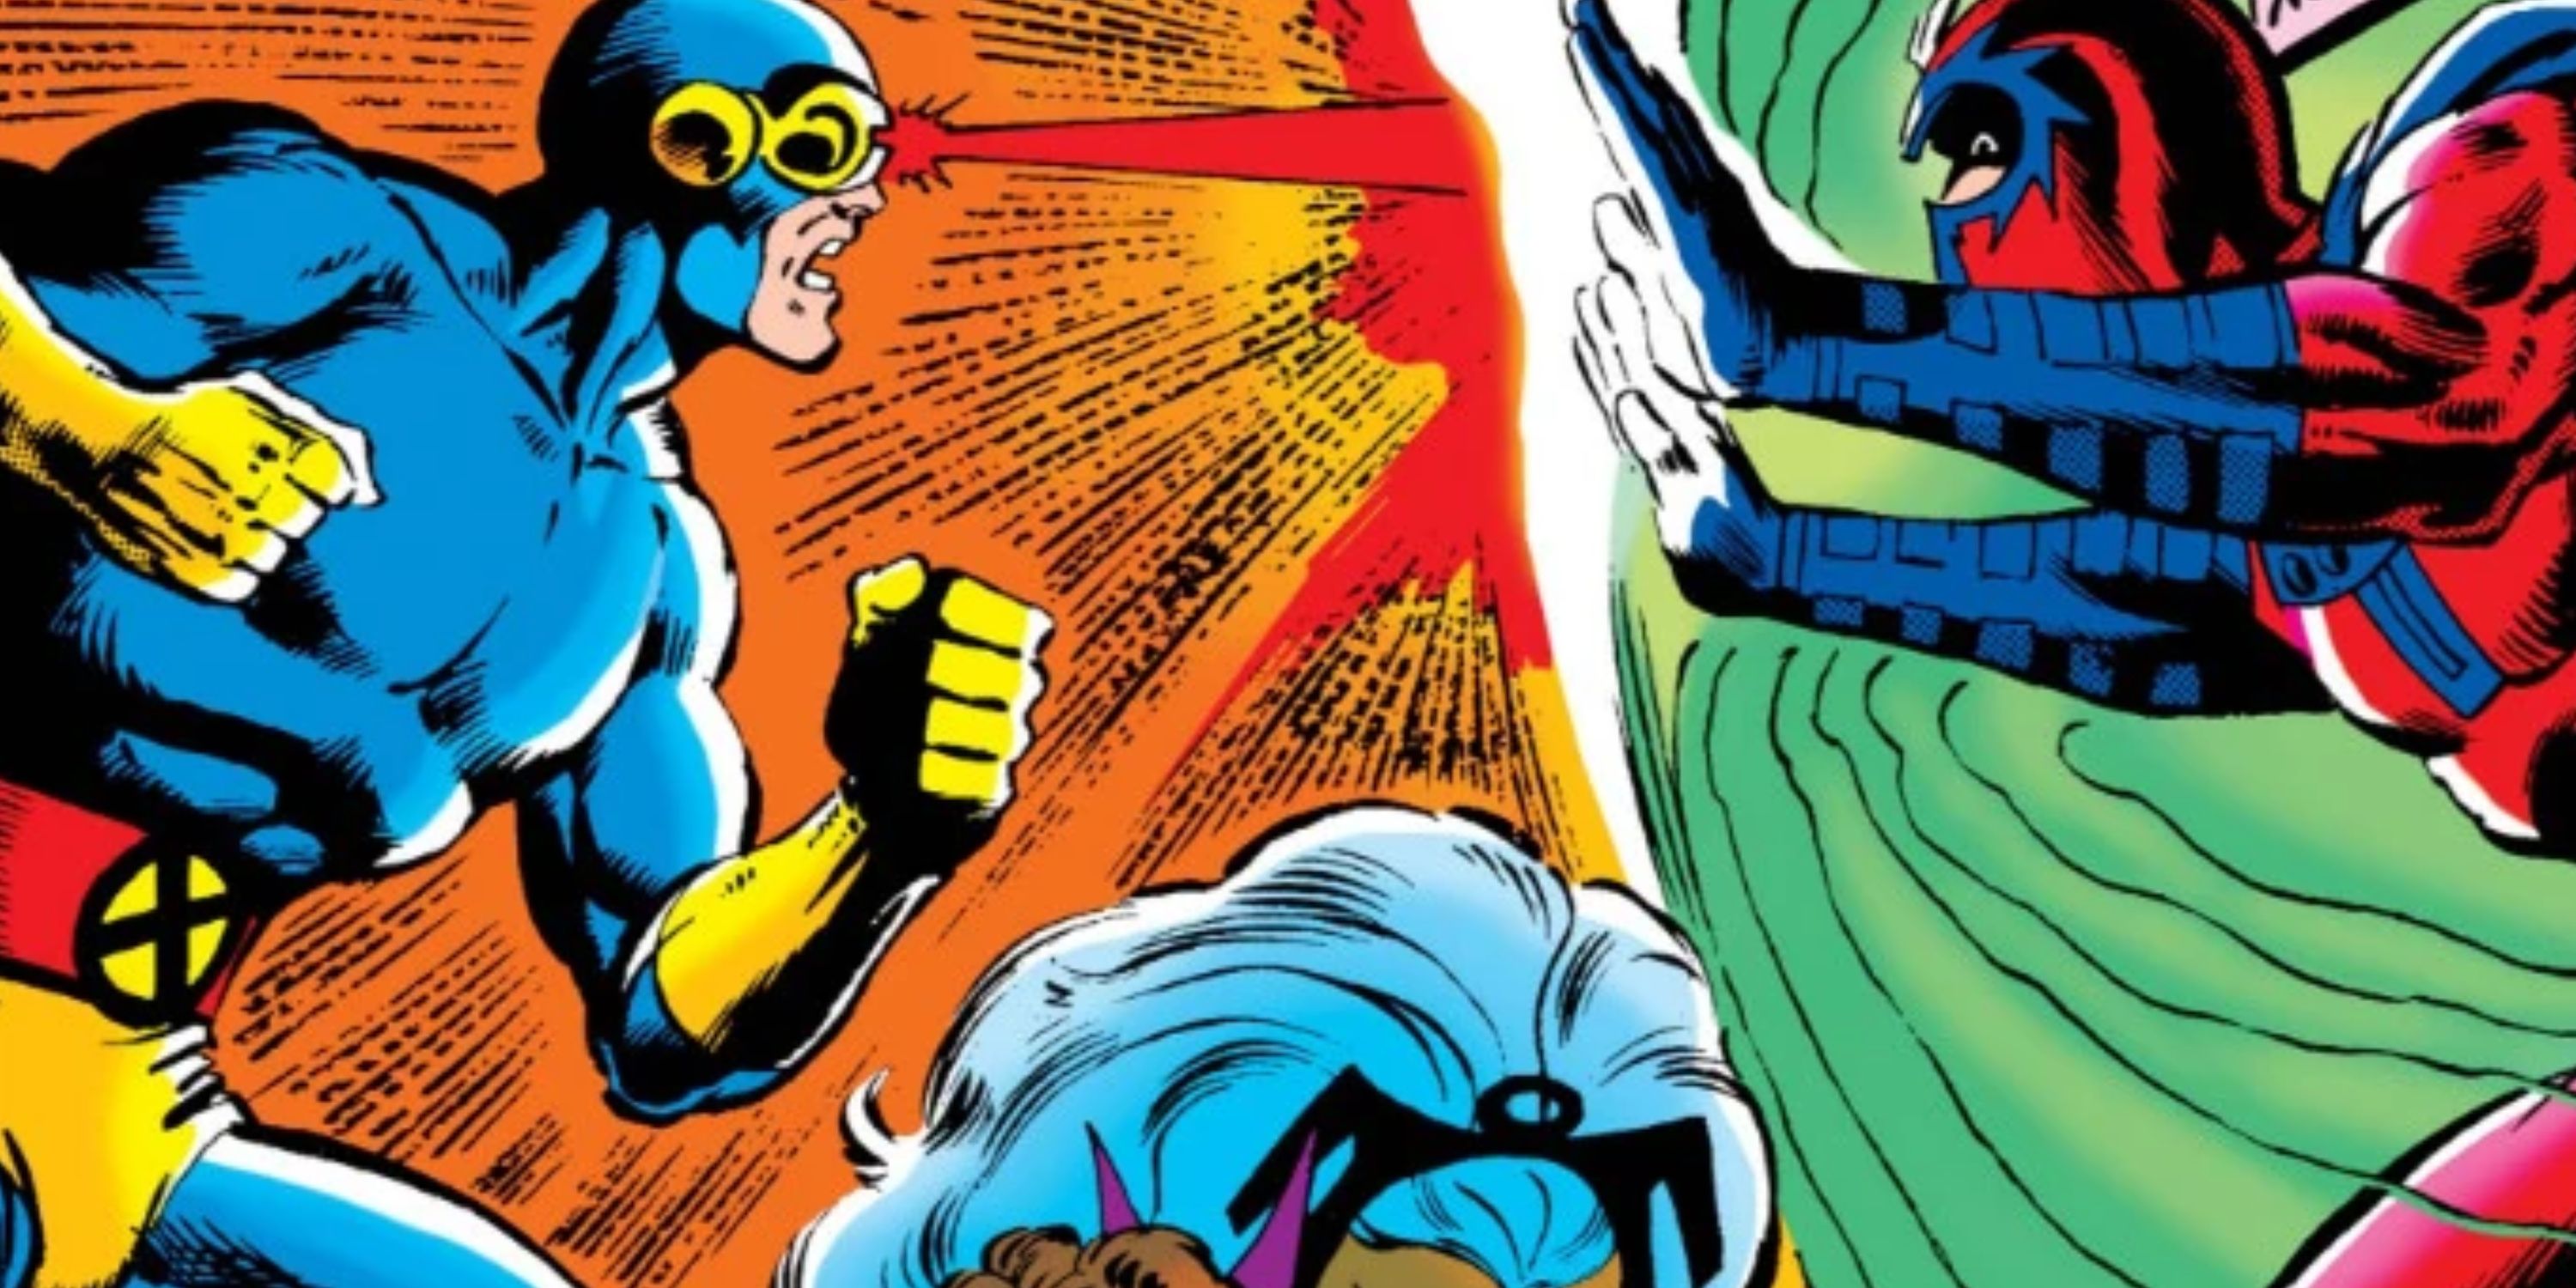 Cyclops blasting Magneto's magnetic force field in X-Men comics